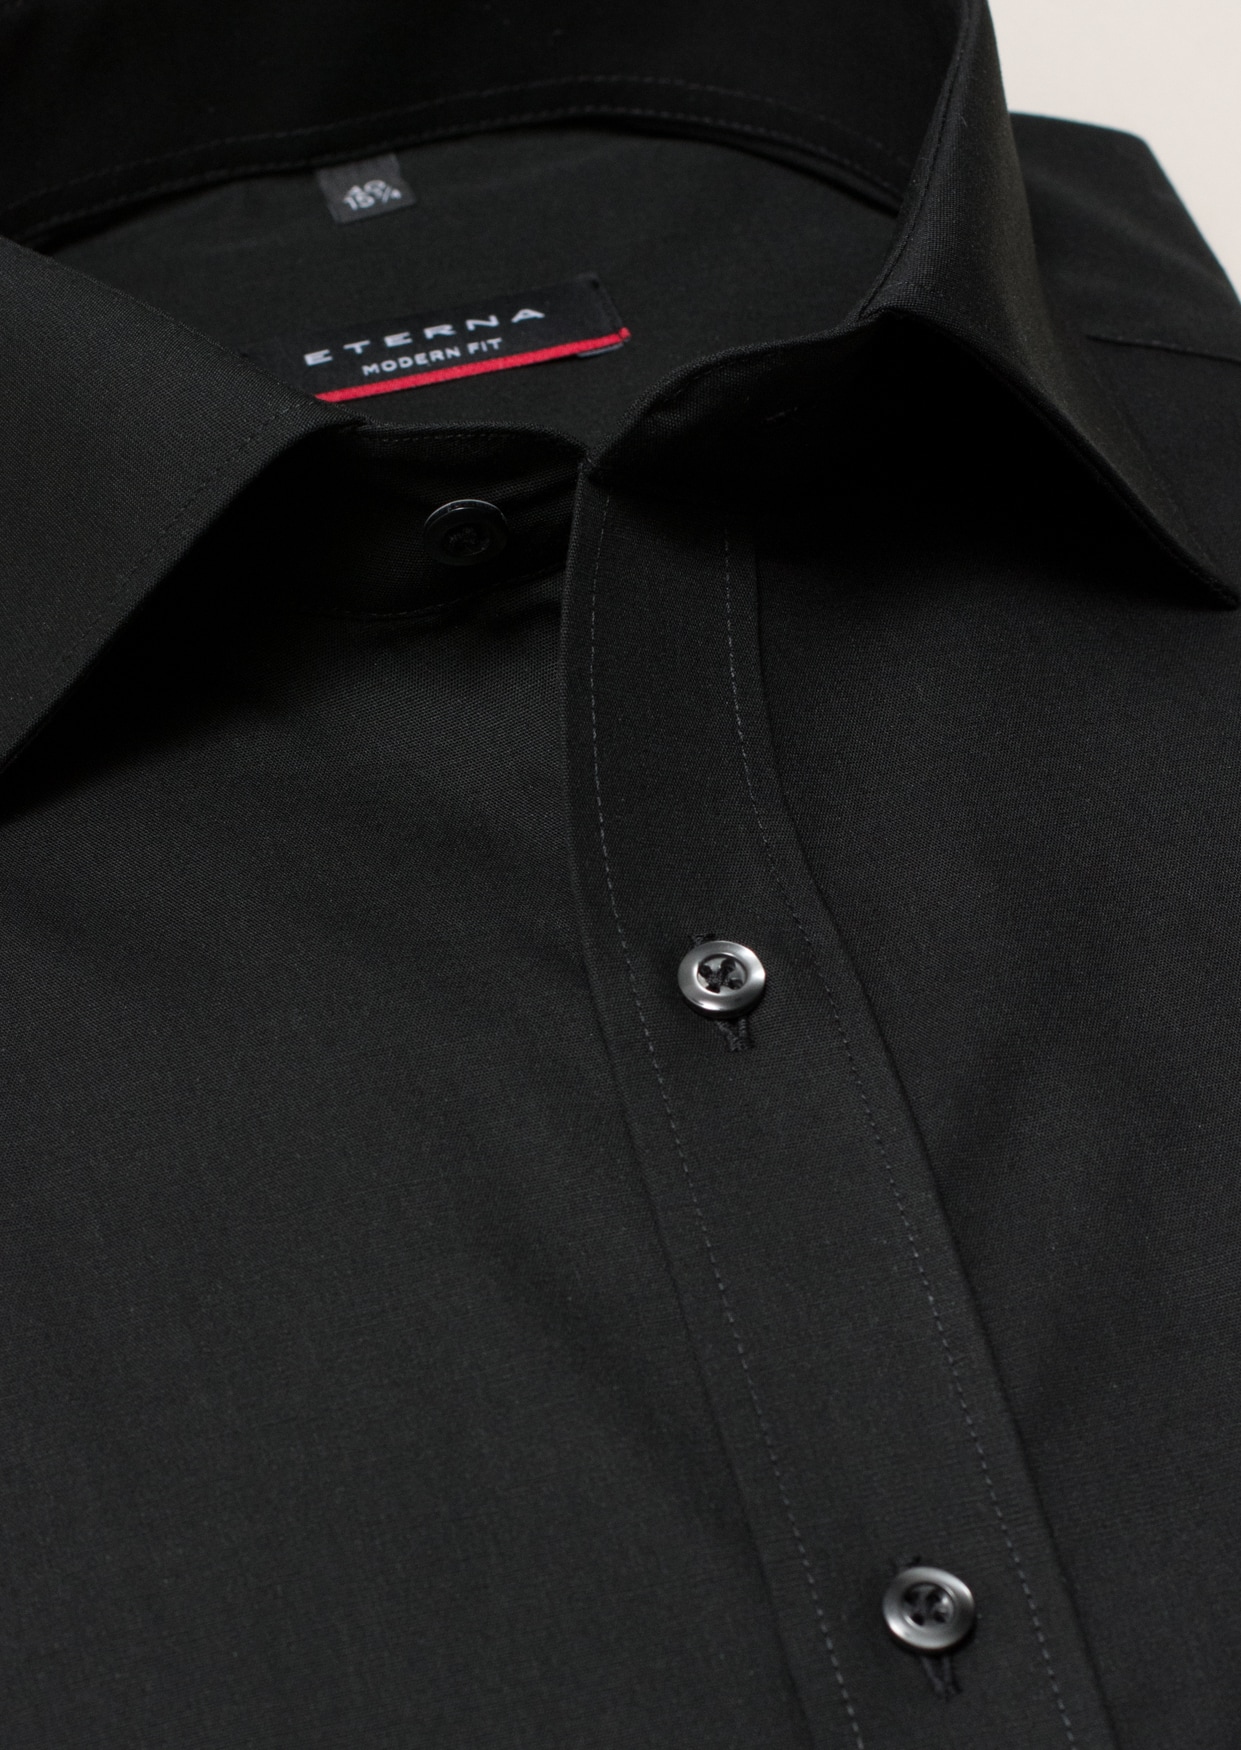 | in | Langarm | 41 | 1SH00113-03-91-41-1/1 unifarben MODERN Original Shirt schwarz schwarz FIT